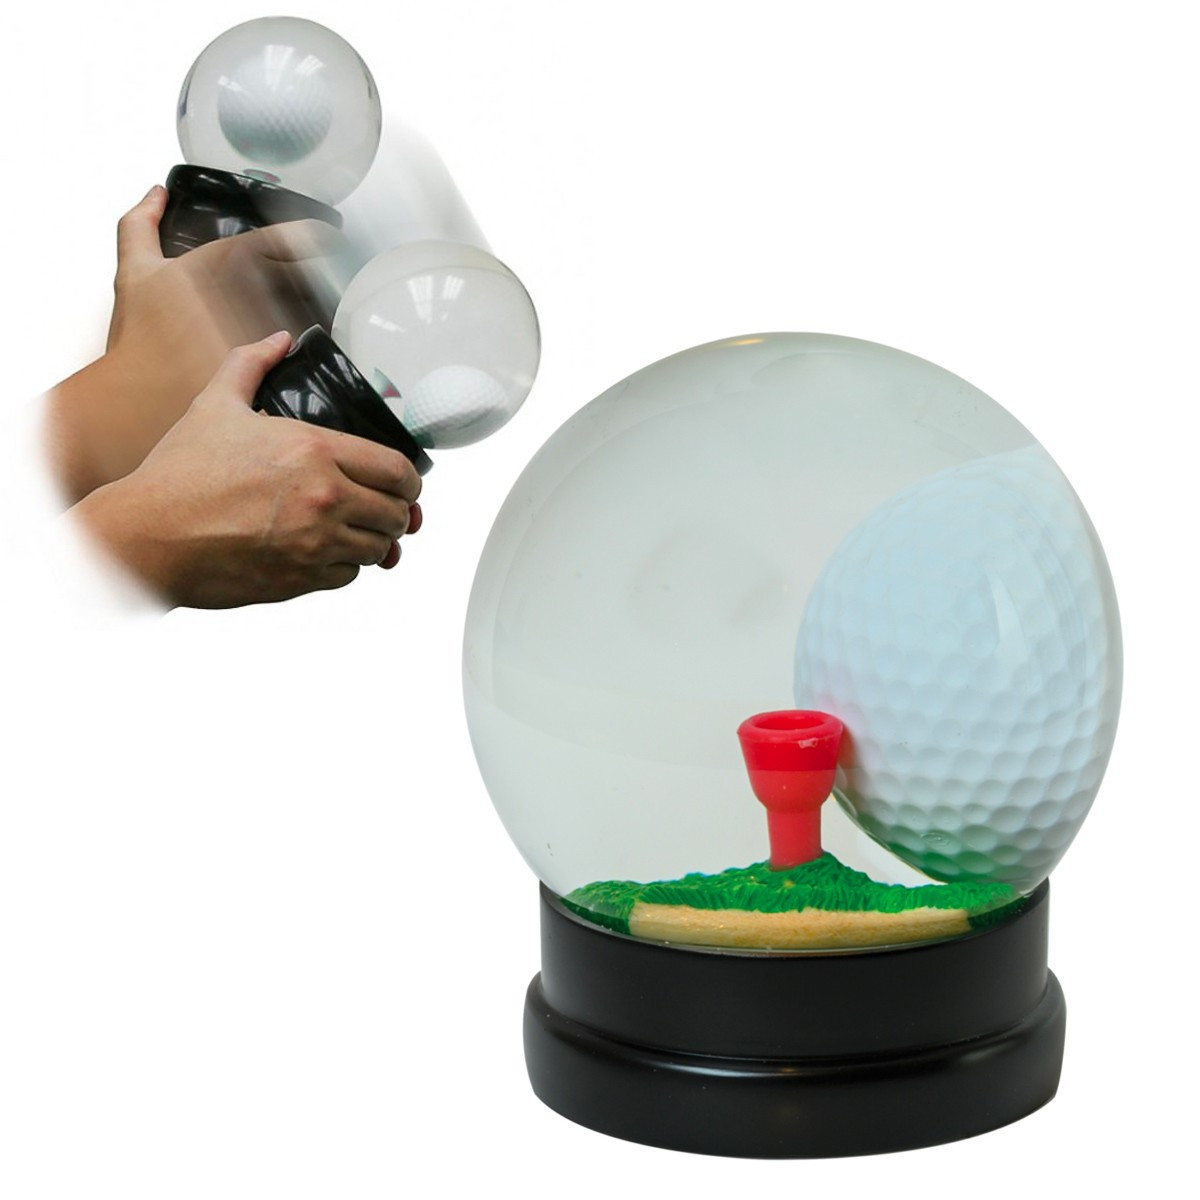 Casse-tête globe balle de golf - 15,90 €